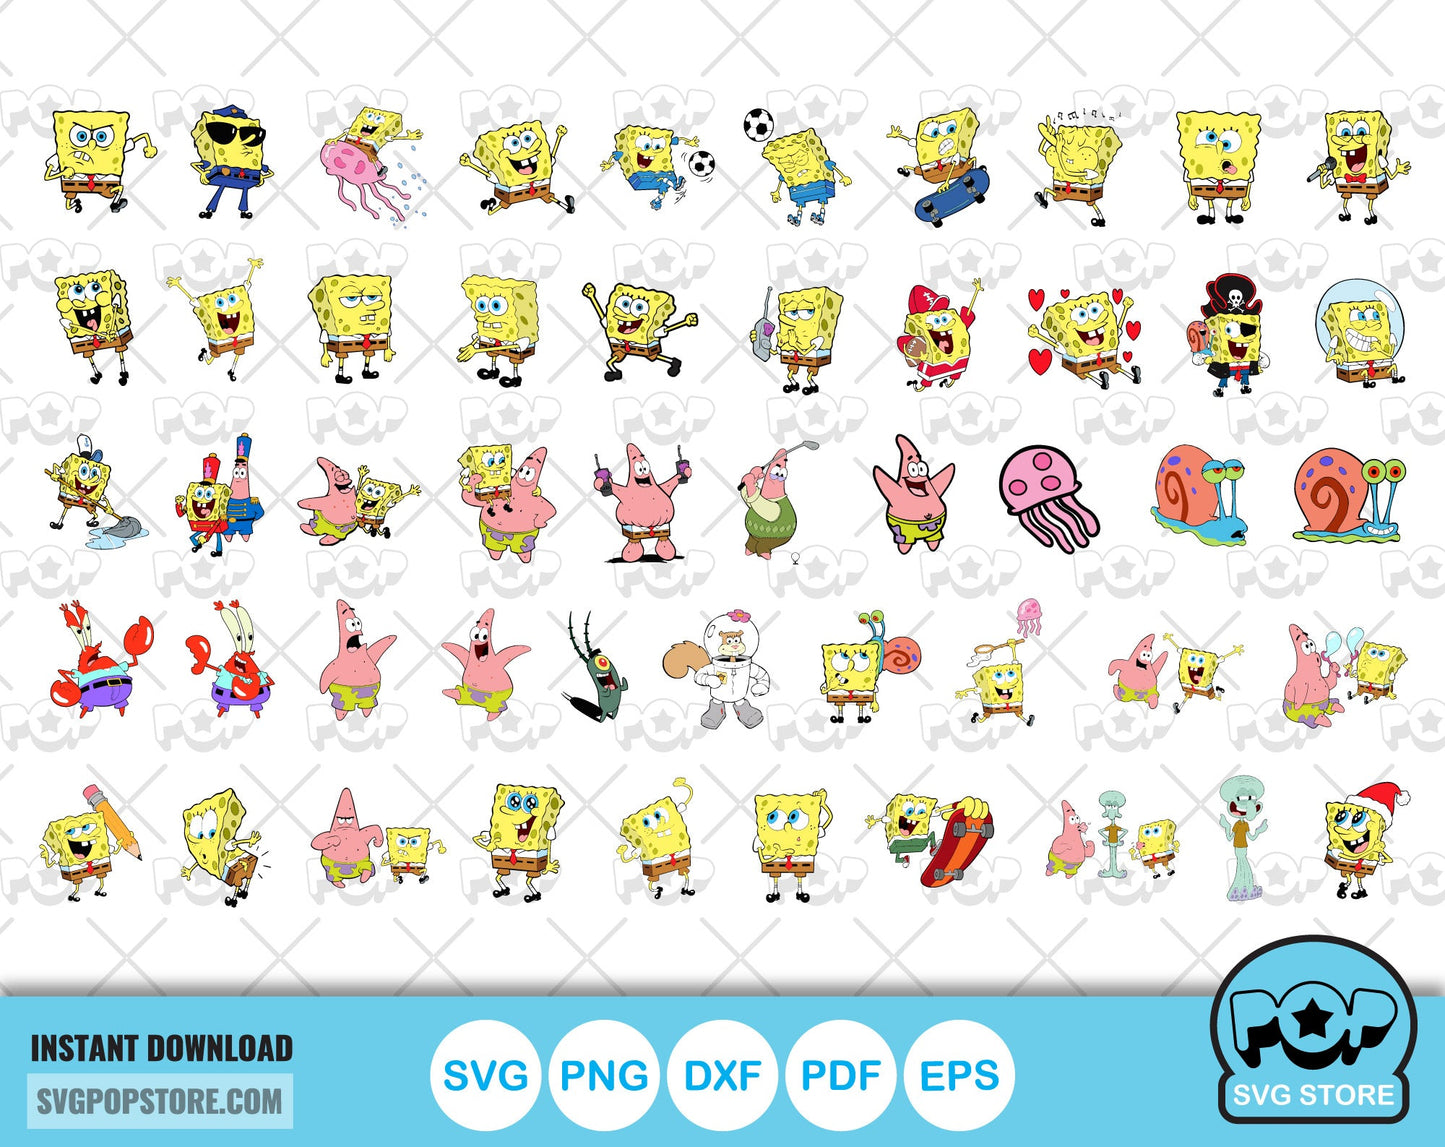 Spongebob Squarepants BIG BUNDLE 500 files, SpongeBob svg cut files for Cricut / Silhouette, Spongebob png